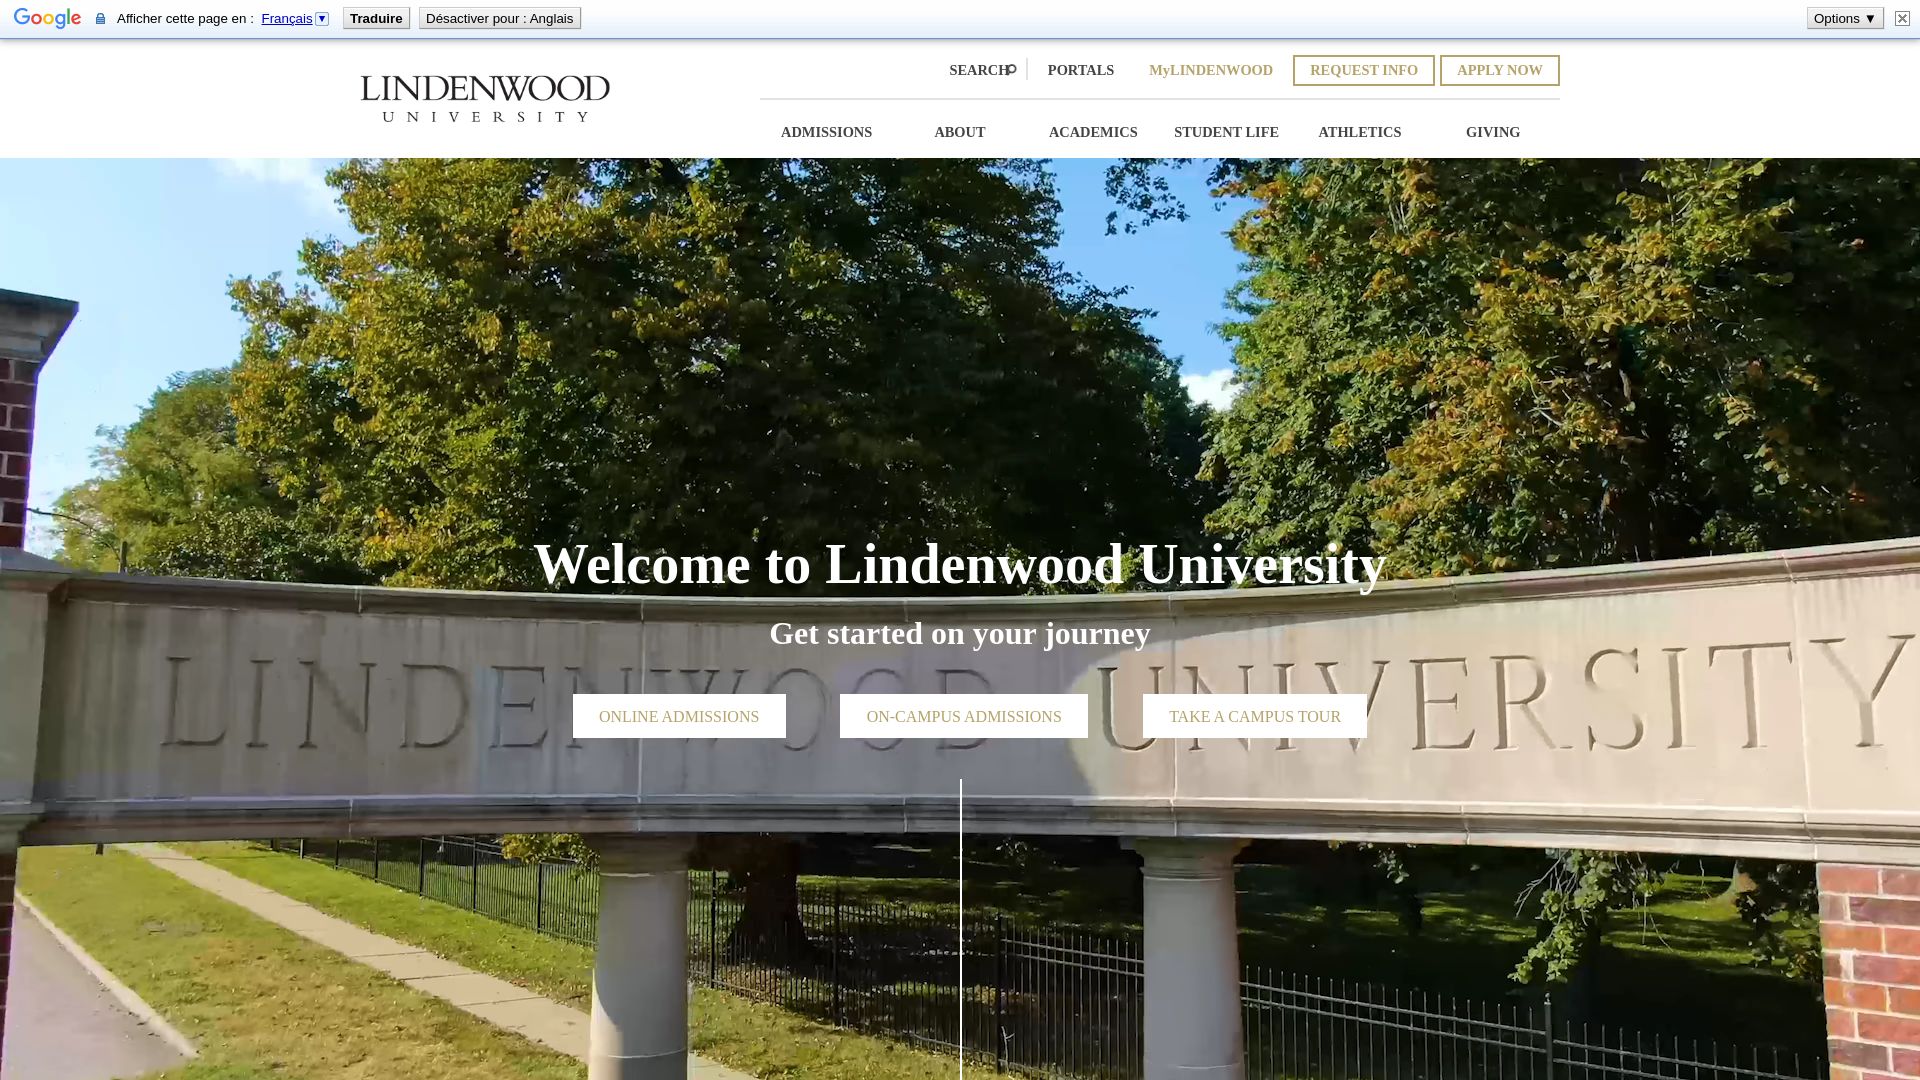 Stato del sito web lindenwood.edu è   ONLINE